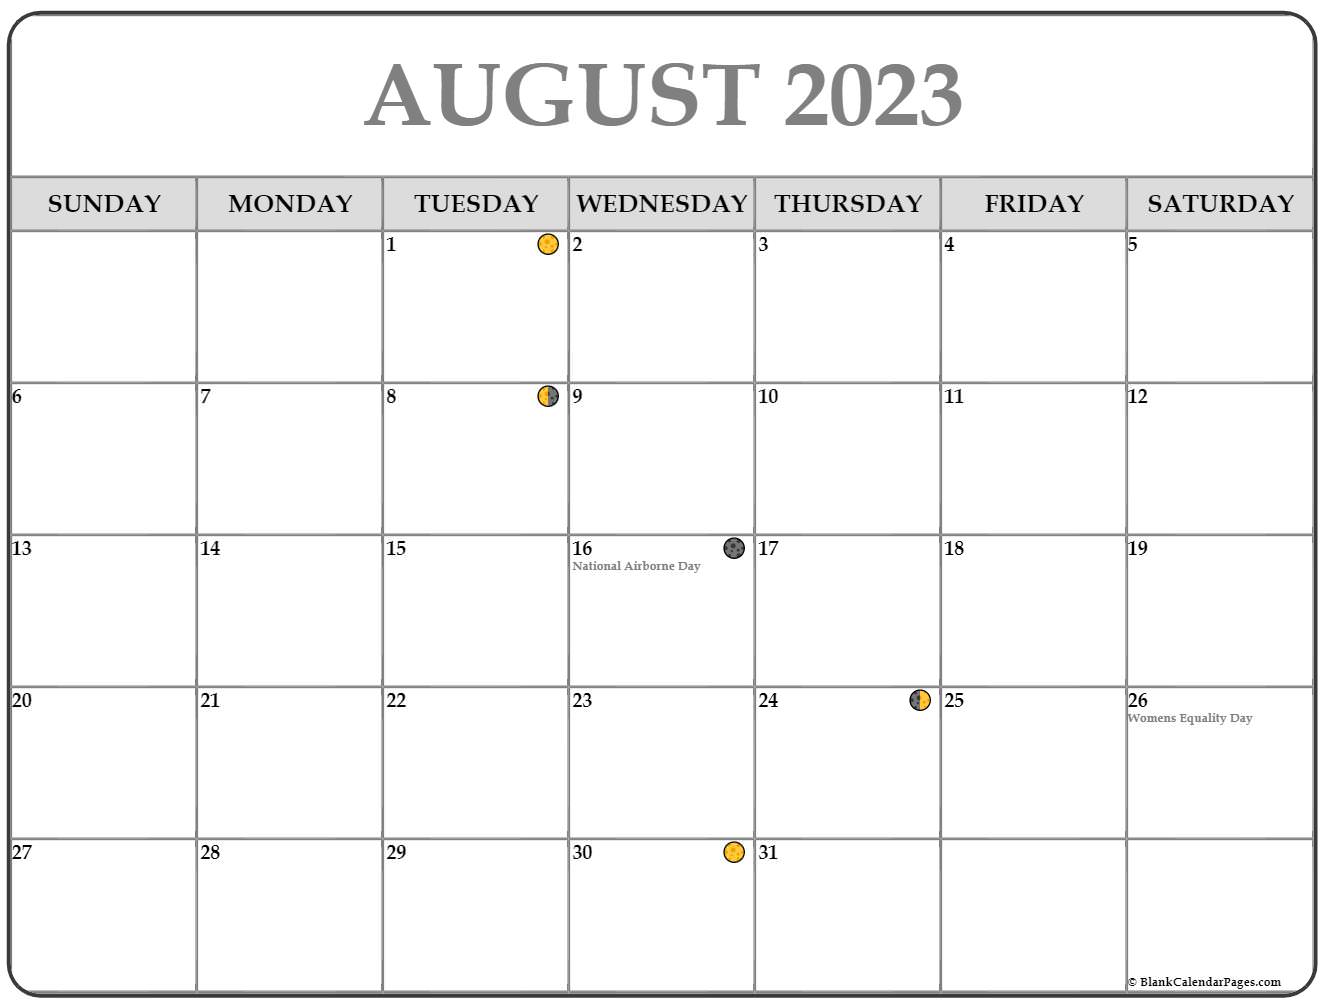 August 2023 Lunar Calendar Moon Phase Calendar